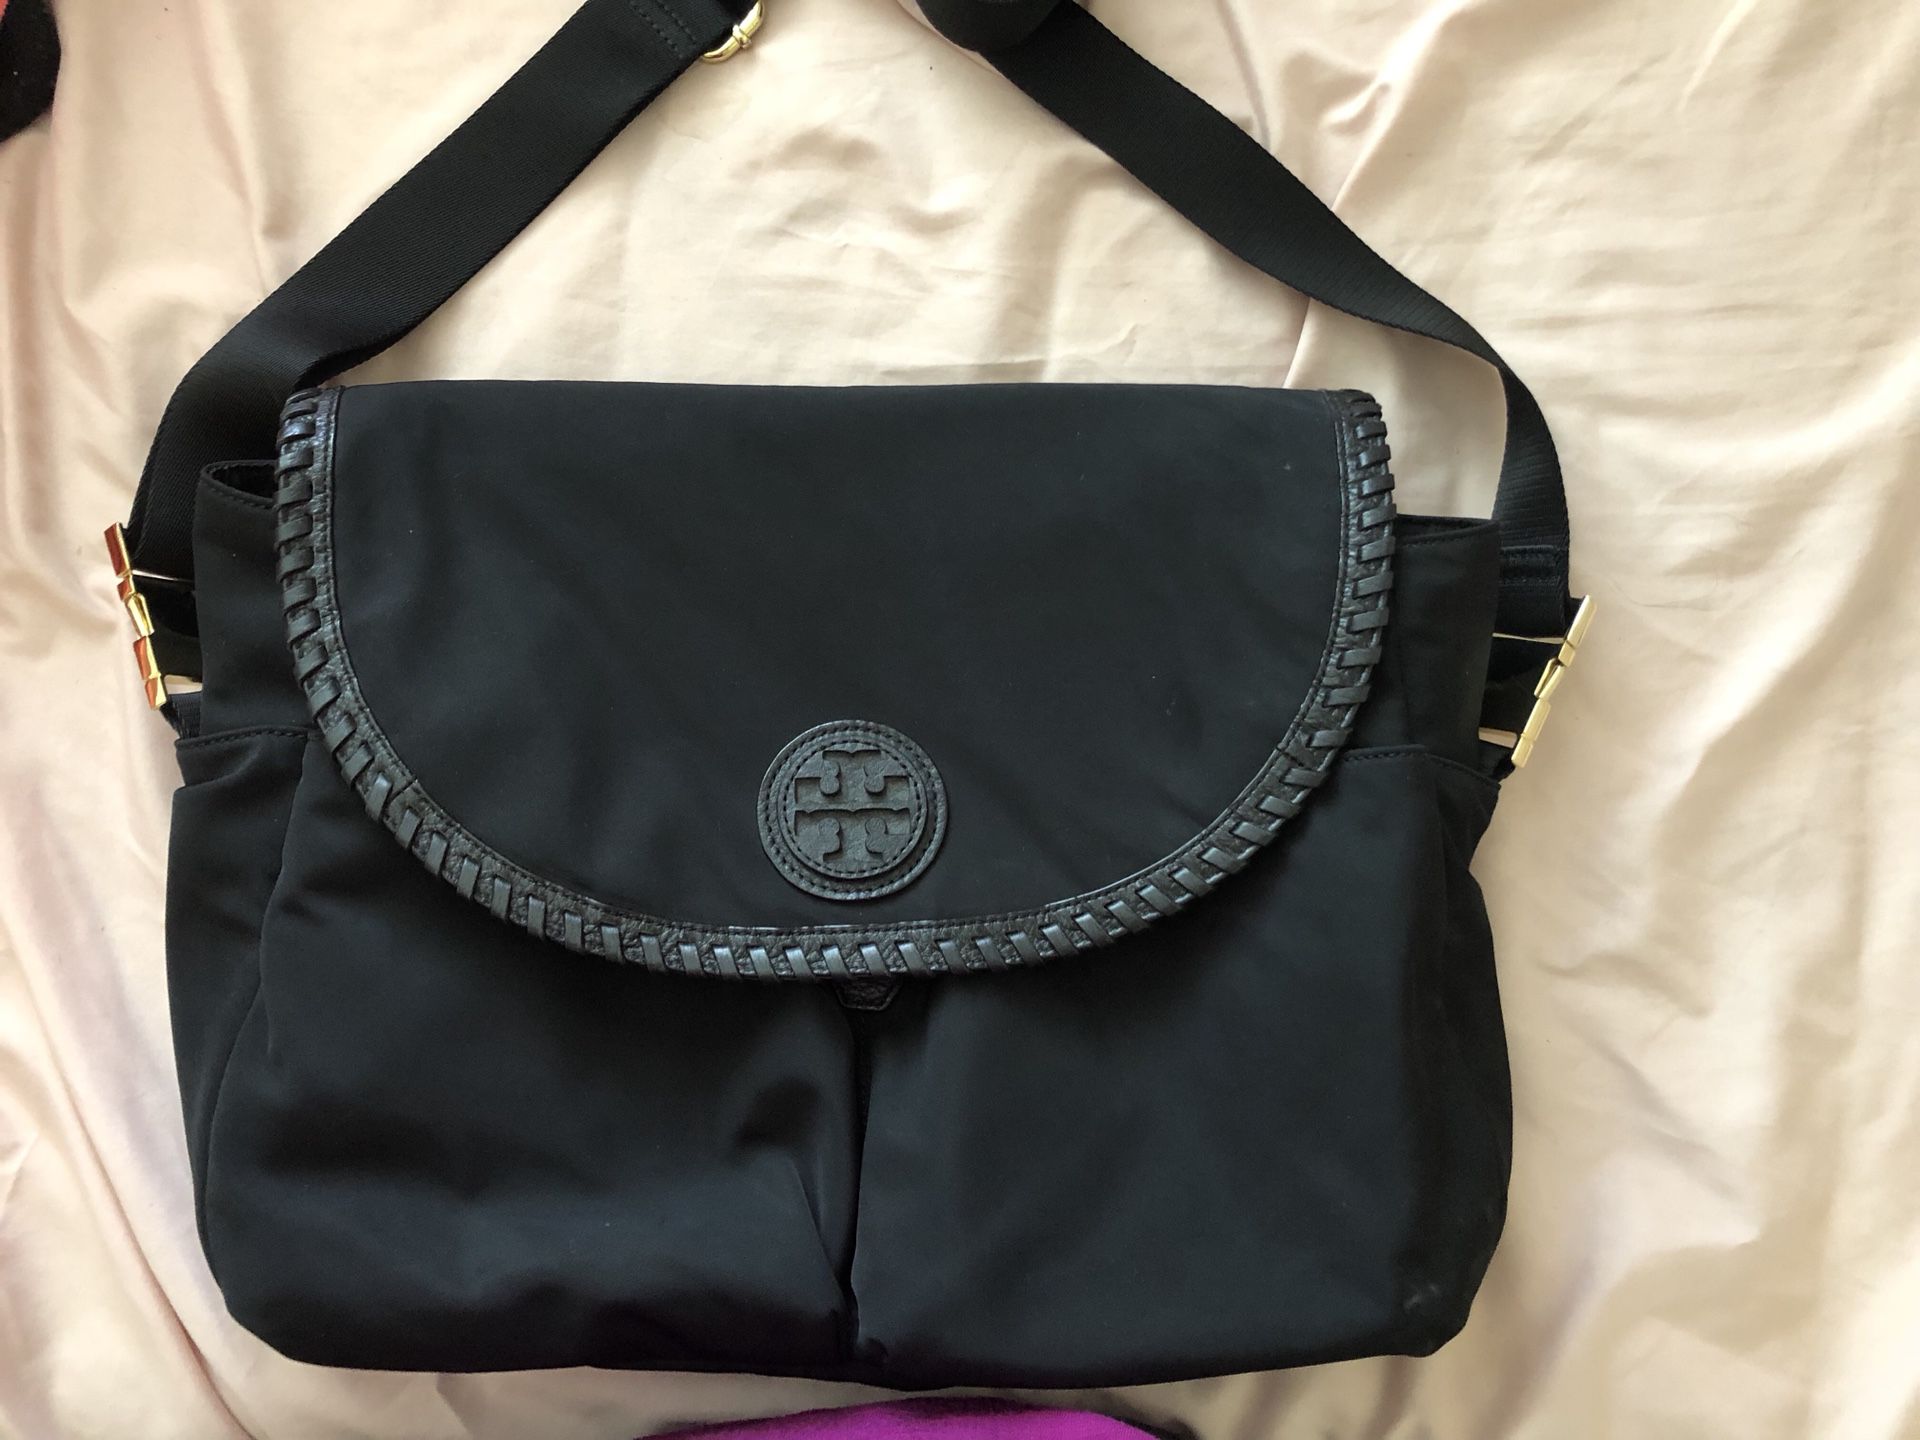 Tory Burch - Emerson Bucket Bag - Black for Sale in Chula Vista, CA -  OfferUp